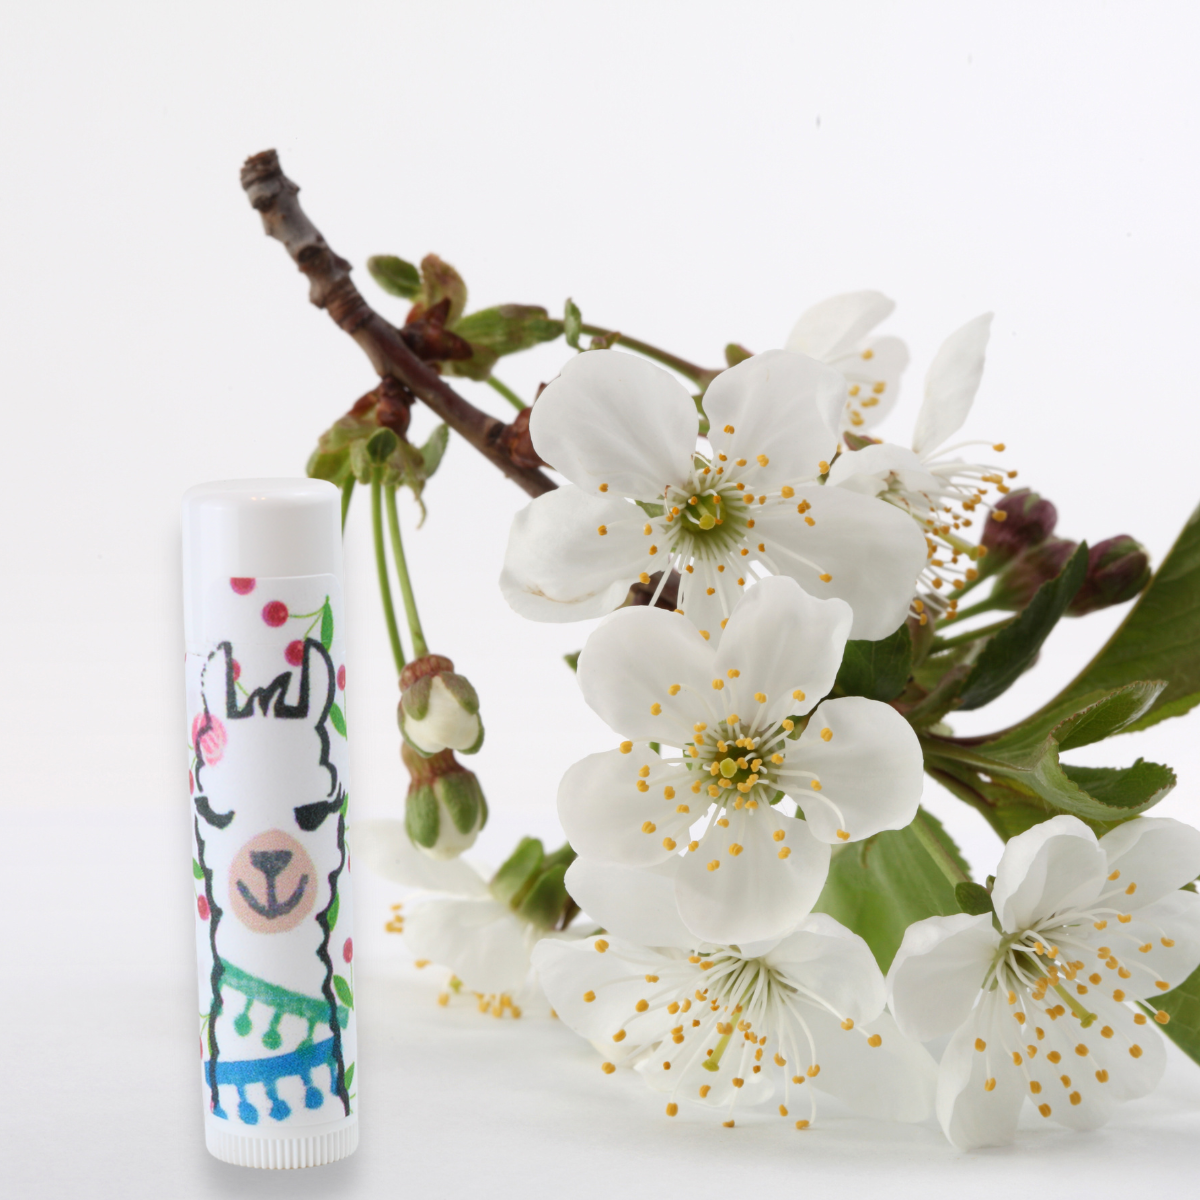  Mon Cherry Flavored Lip Balm in photo with cherry blossom branch Alpaca Soaps, AlpacaSoaps